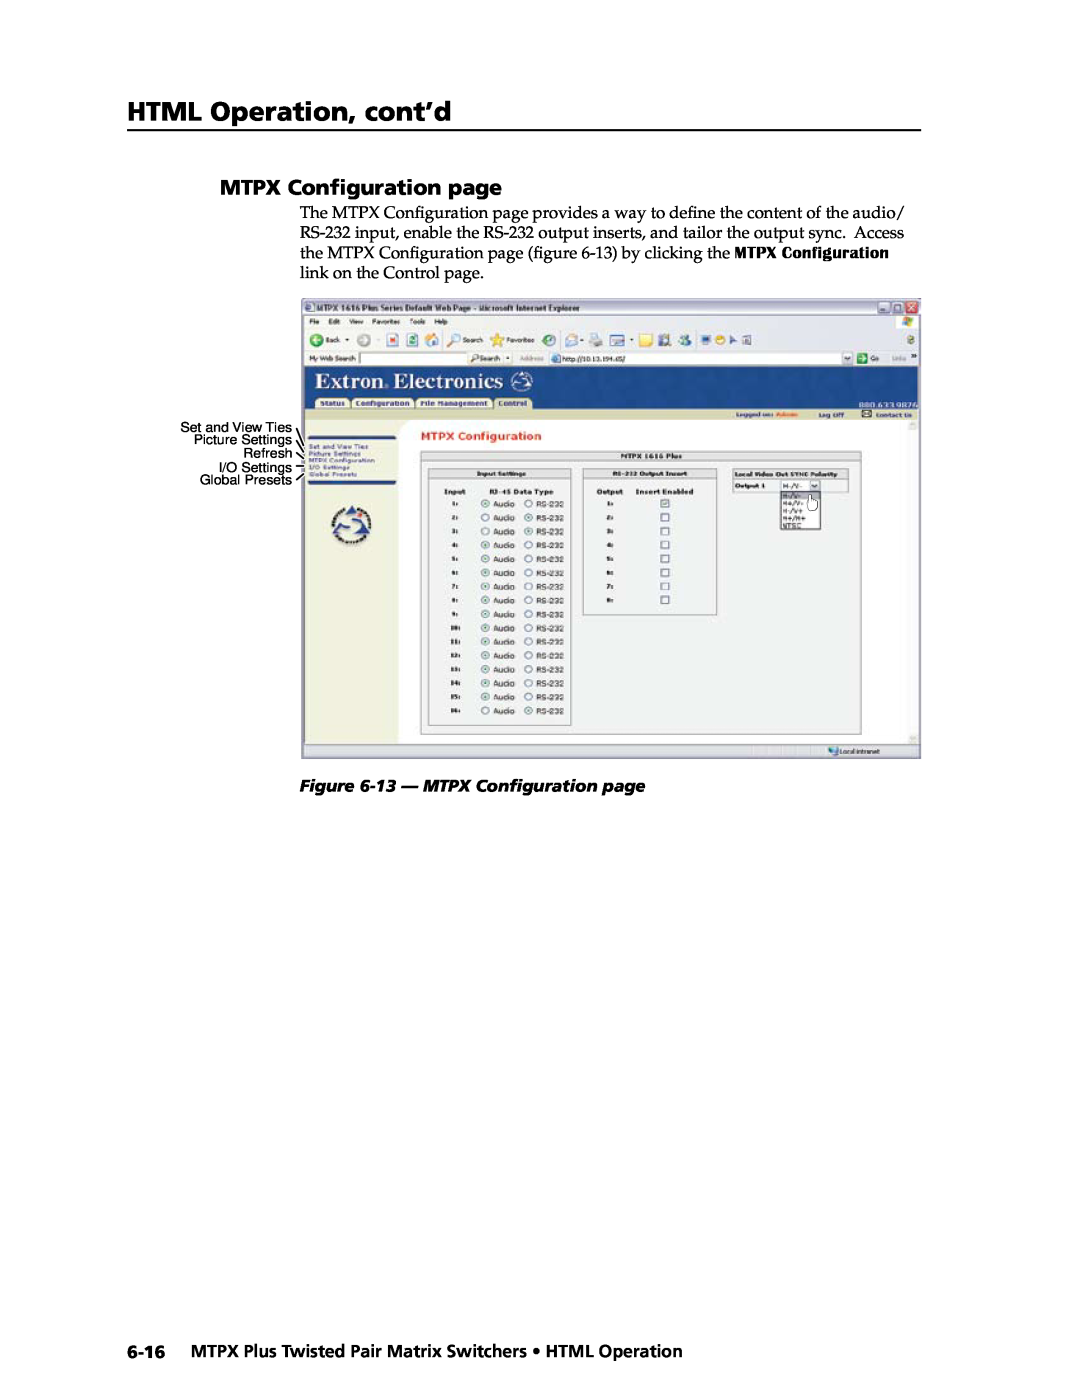 Extron electronic MTPX Plus Series manual HTML Operation, cont’d, 13 - MTPX Configuration page 